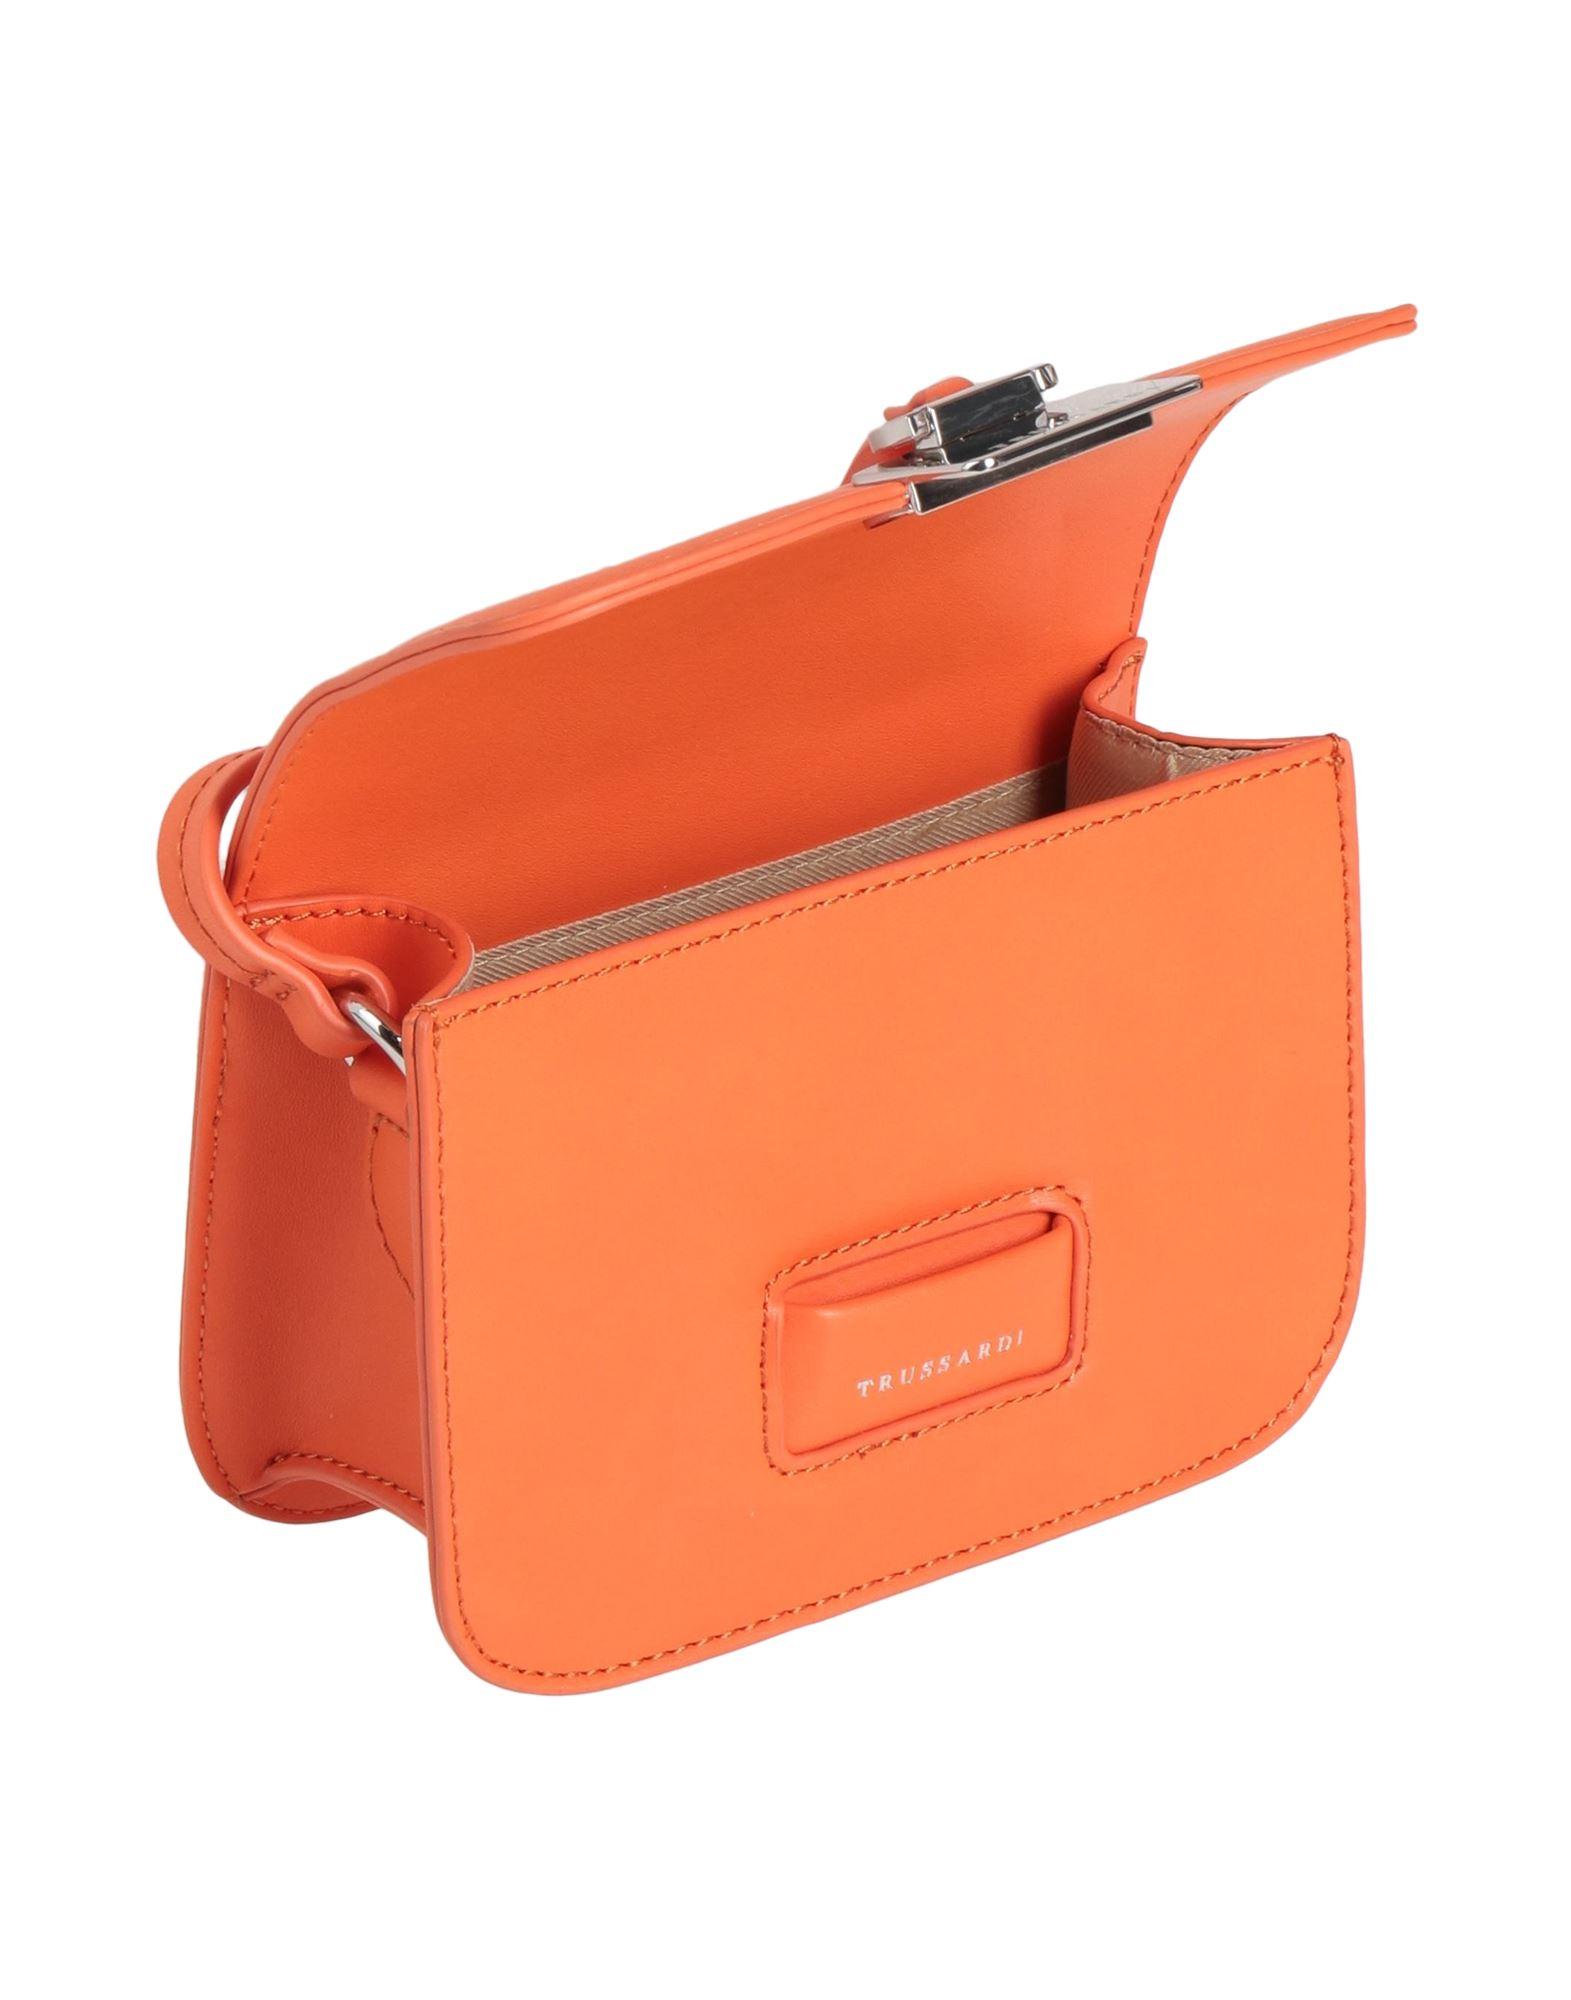 Trussardi Cross-body Bag in Orange | Lyst